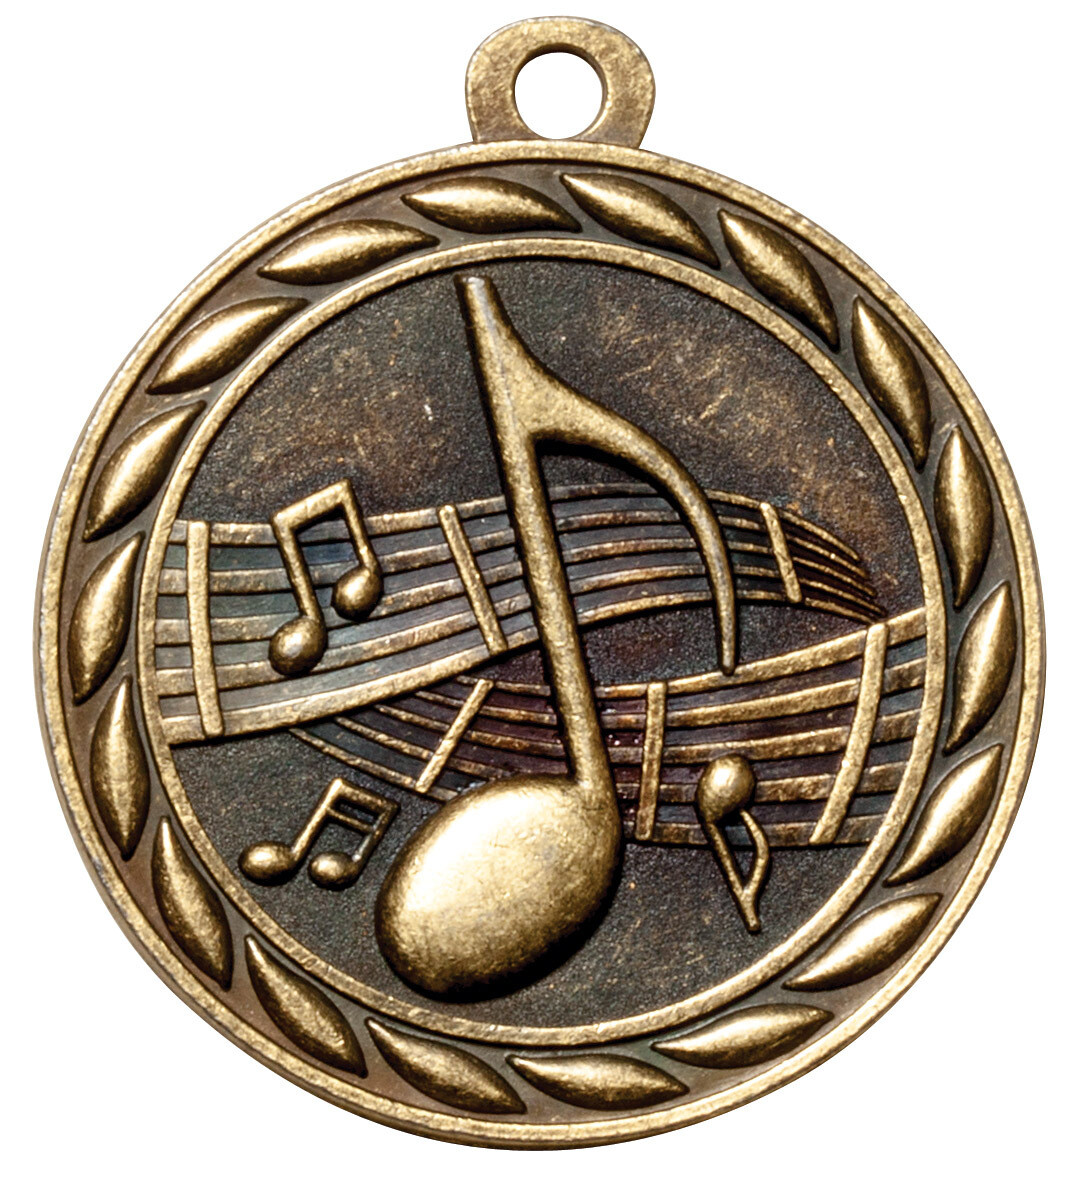 Scholastic Medal Series
MUSIC AWARD